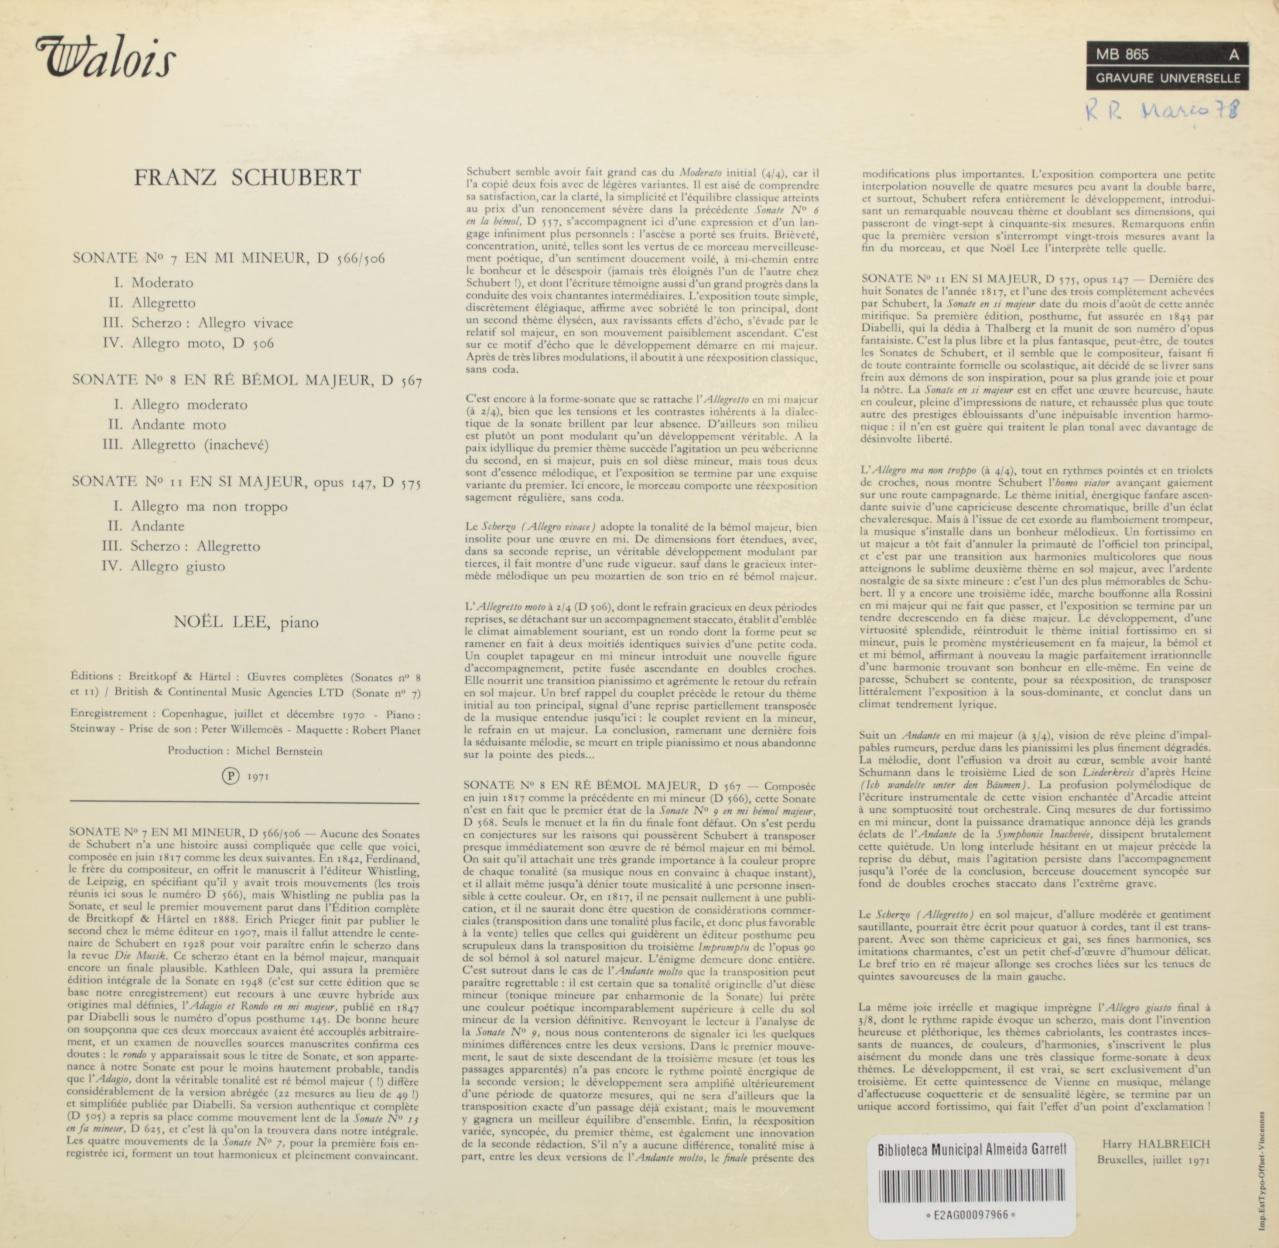 Schubert: Sonate nº 7 en mi mineur; D 566/506; Sonate nº8 en ré bémol majeur, D 567; Sonate nº 